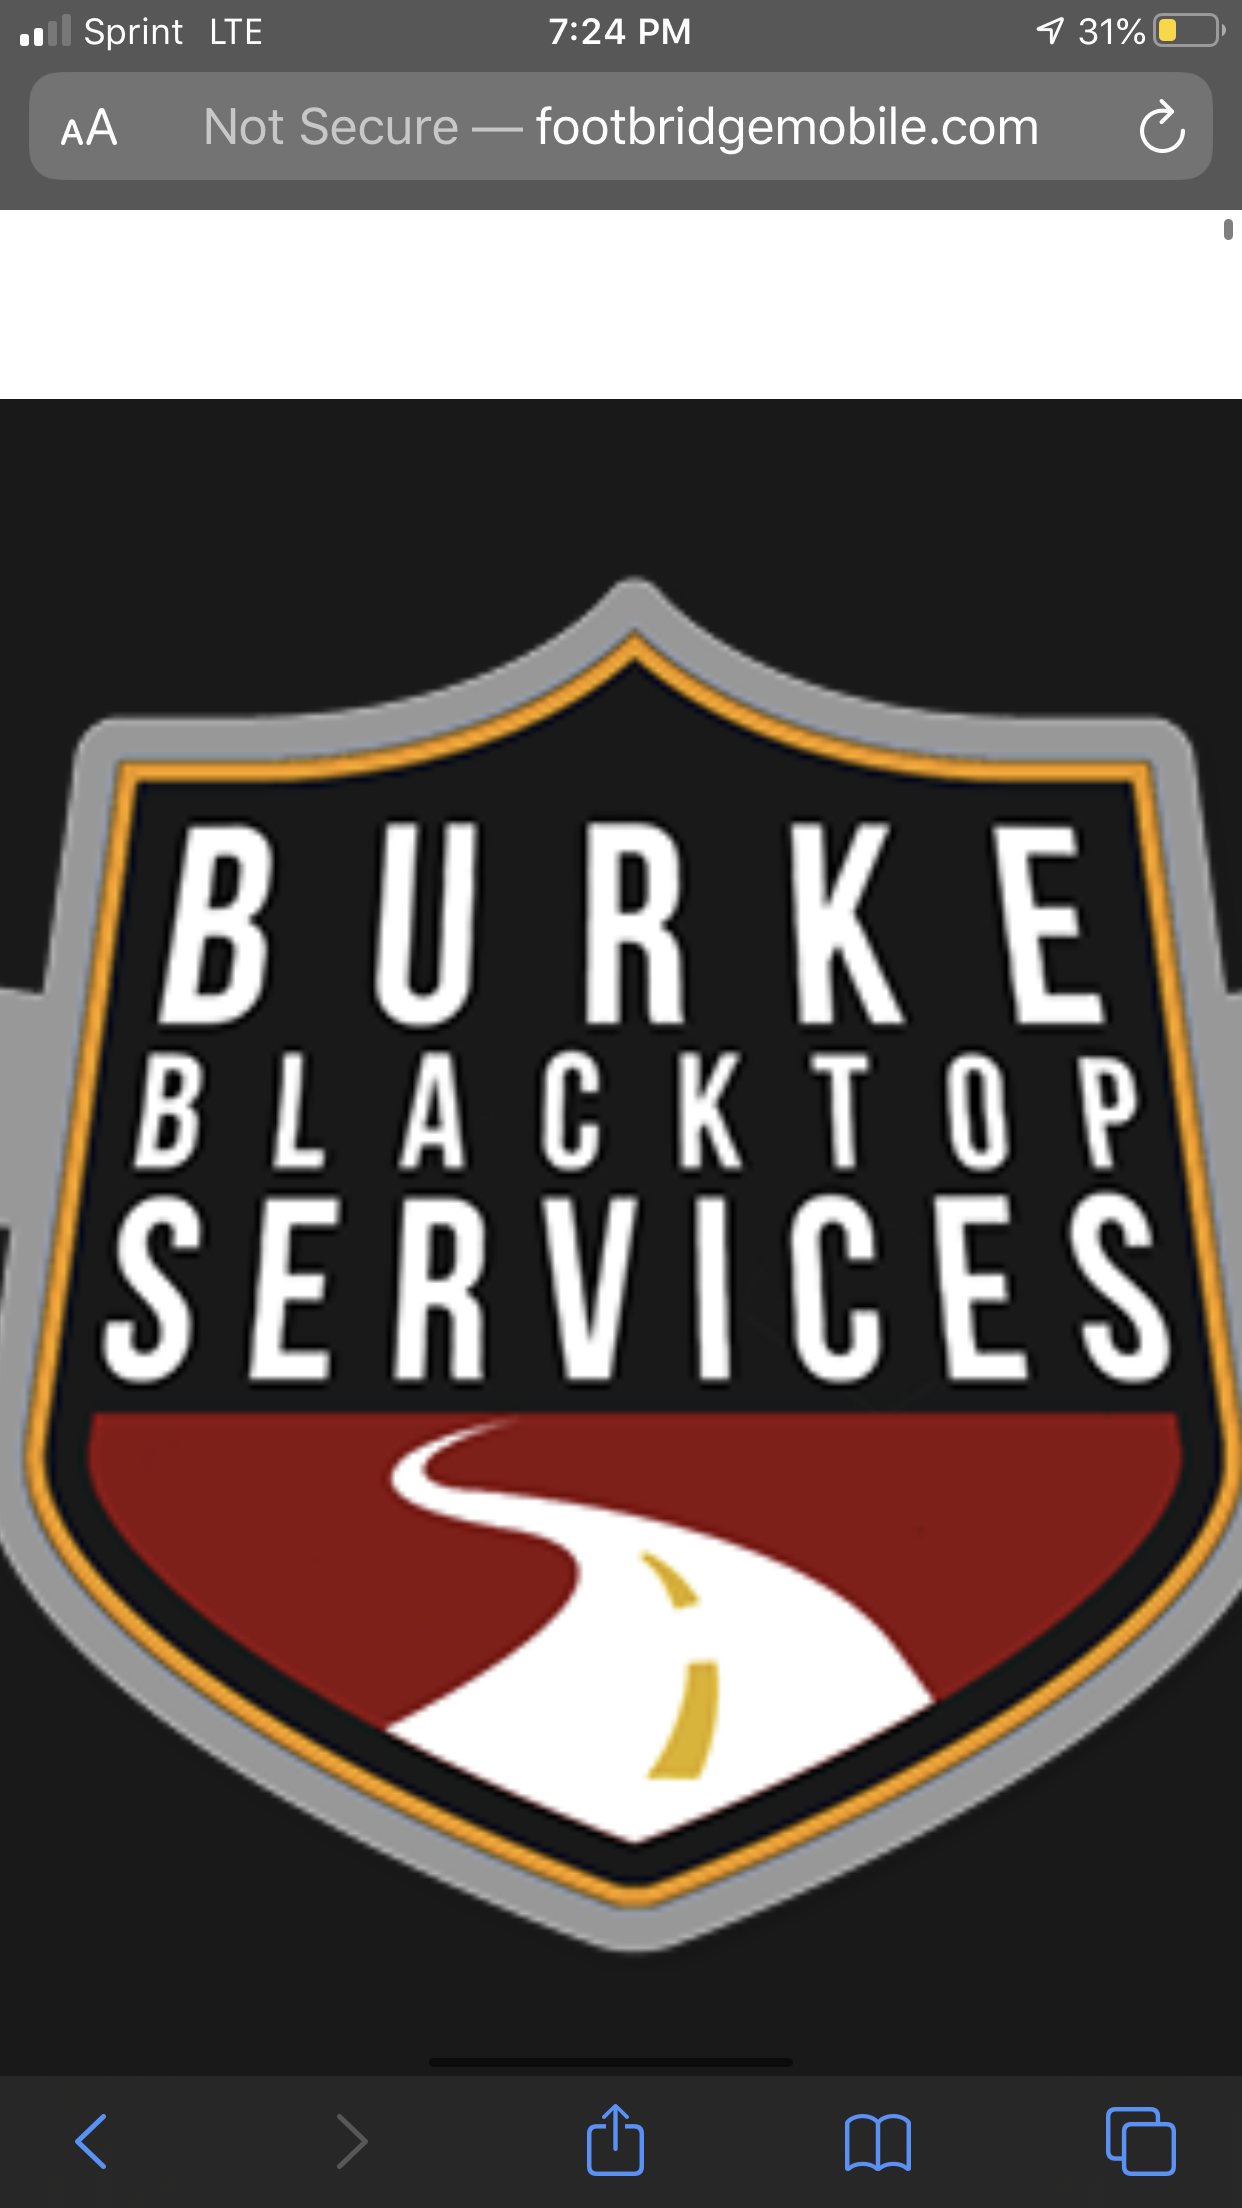 Burke Blacktop Services Logo